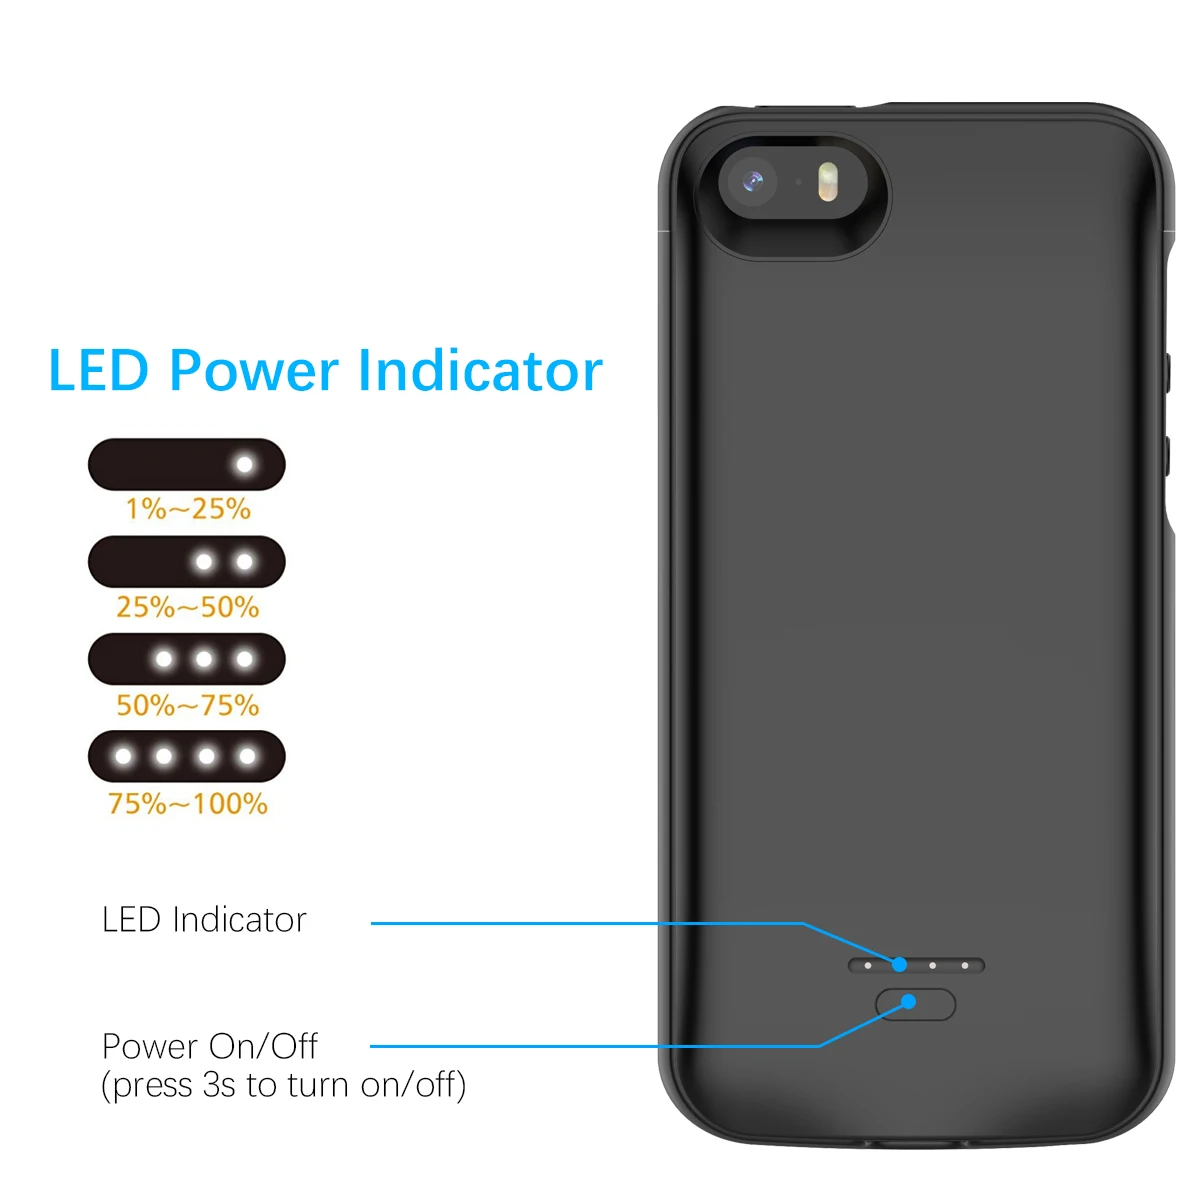 4000 мАч чехол для зарядного устройства для iPhone SE 5SE 5 5S чехол внешний аккумулятор чехол для зарядки внешний аккумулятор для iPhone 5 5S чехол с пряжкой